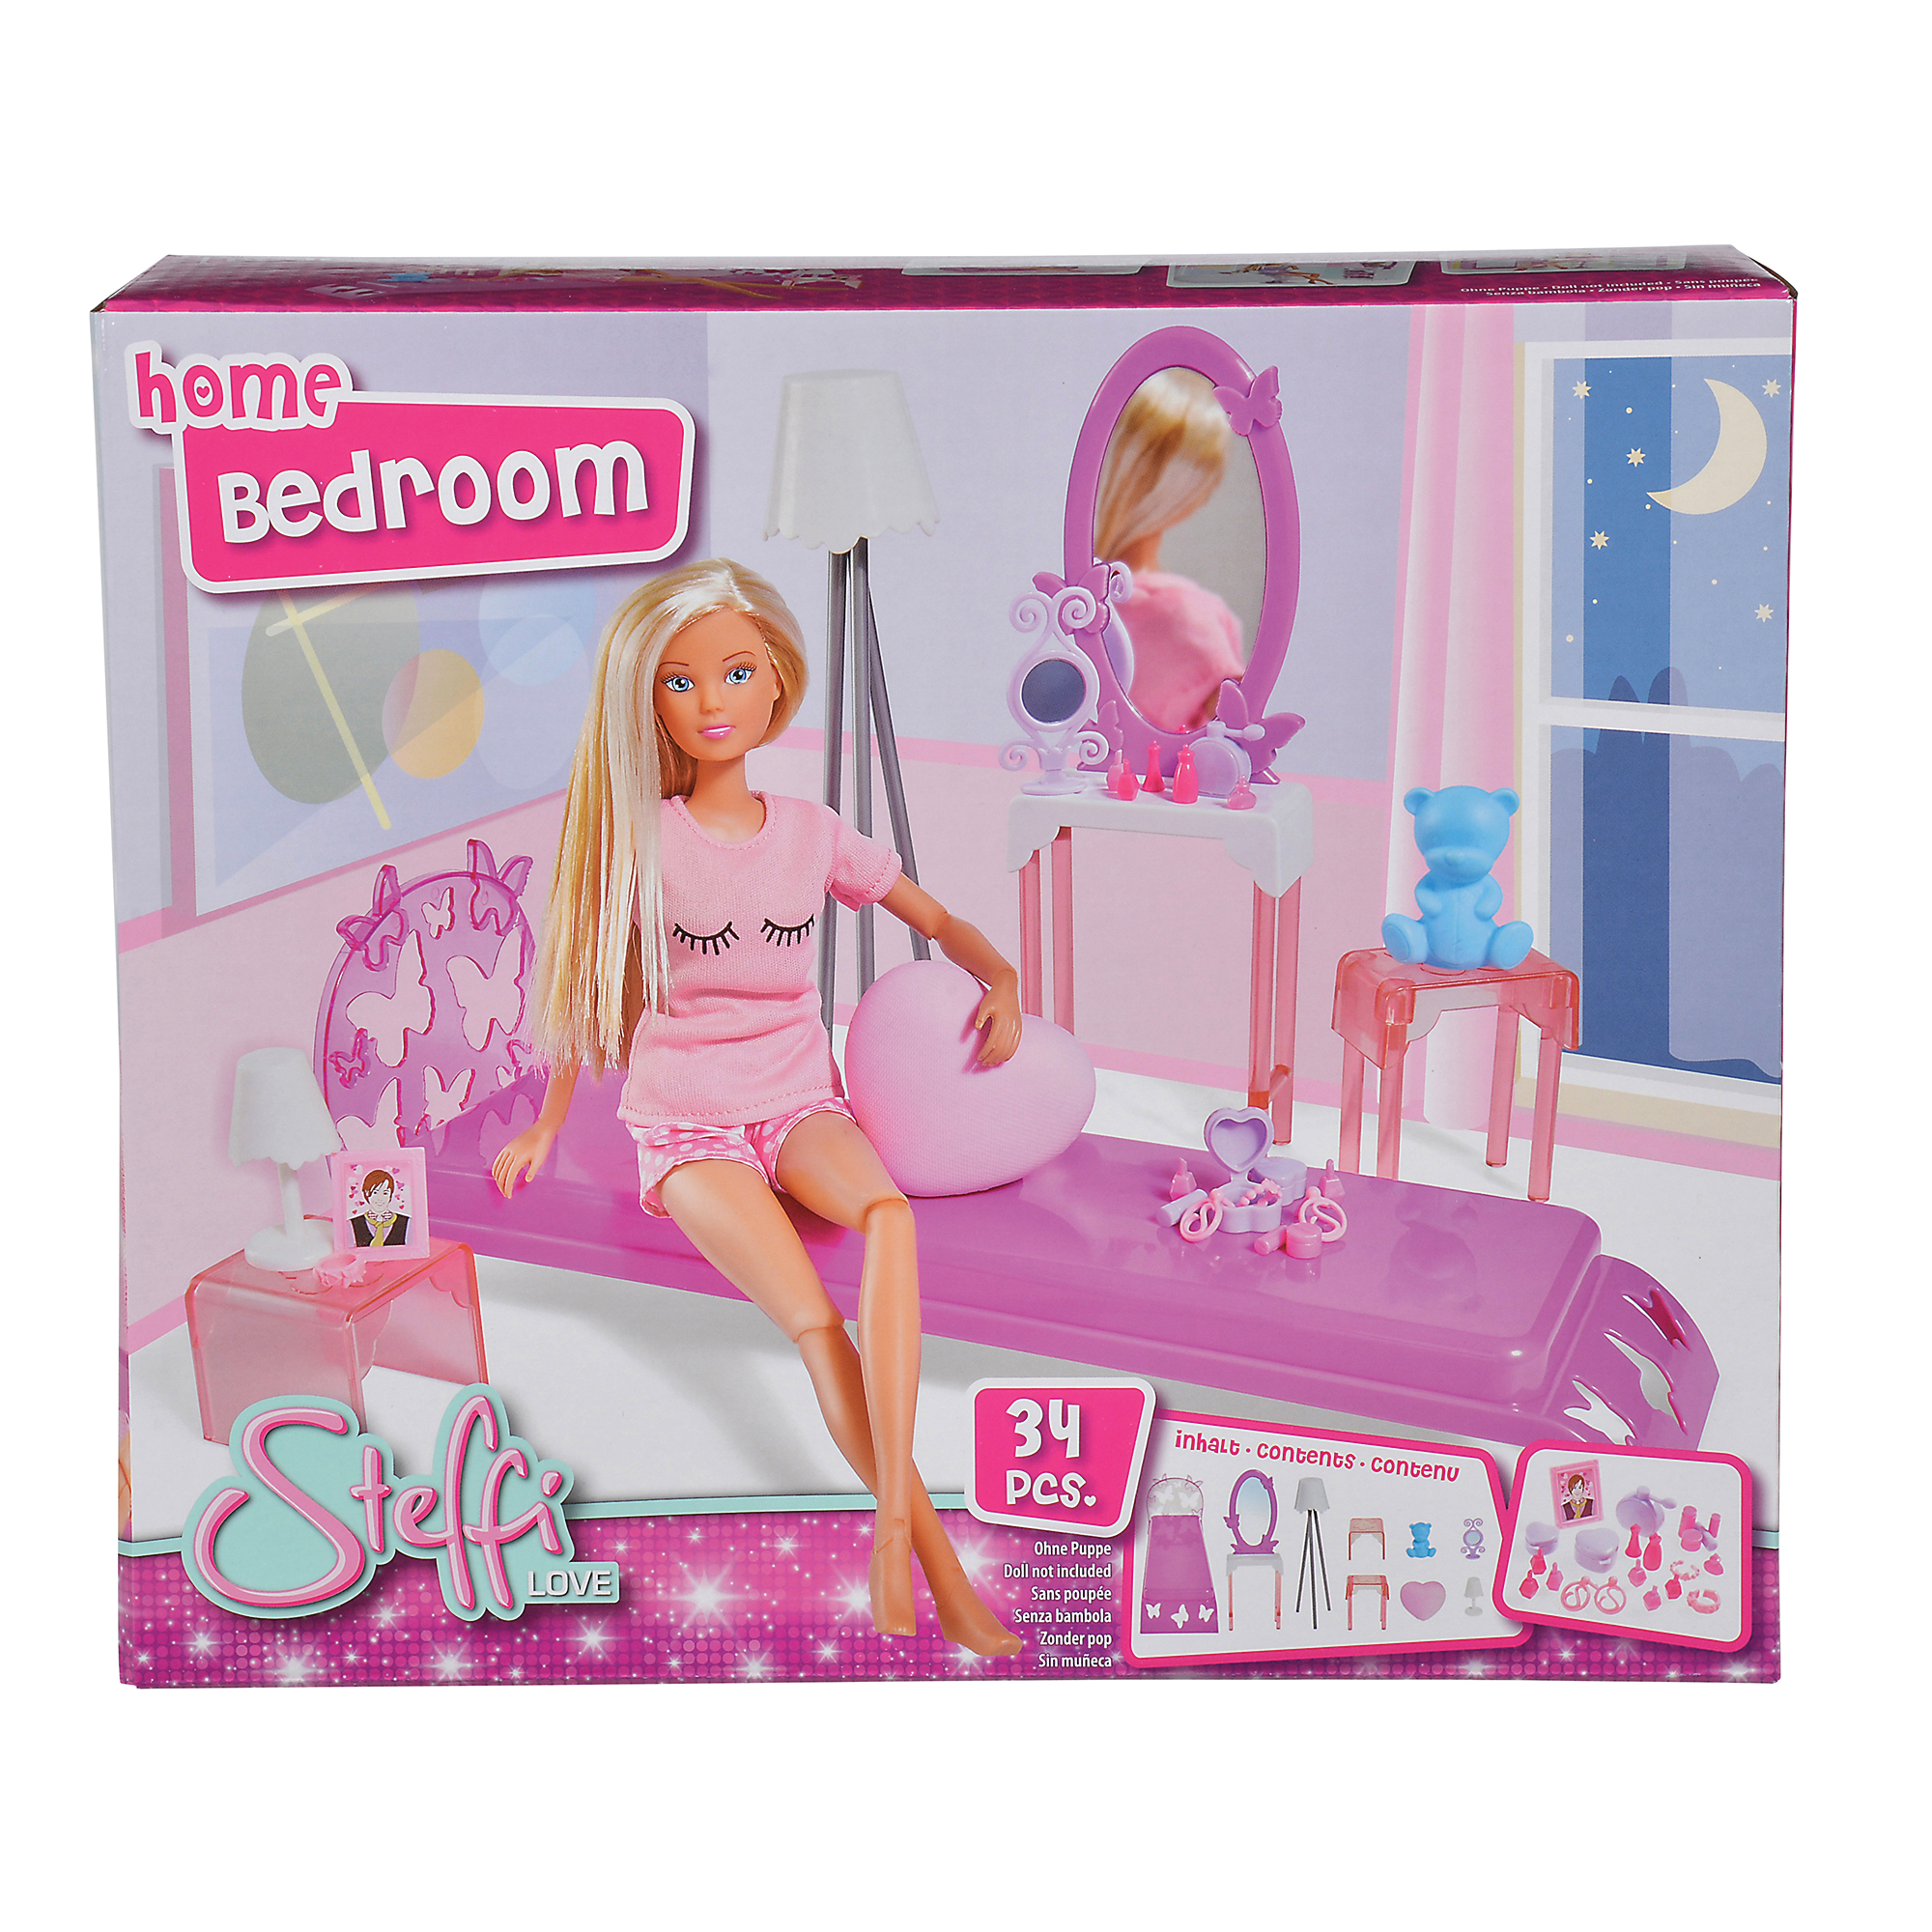 Simba Toys - Steffi Love Home, Bedroom 